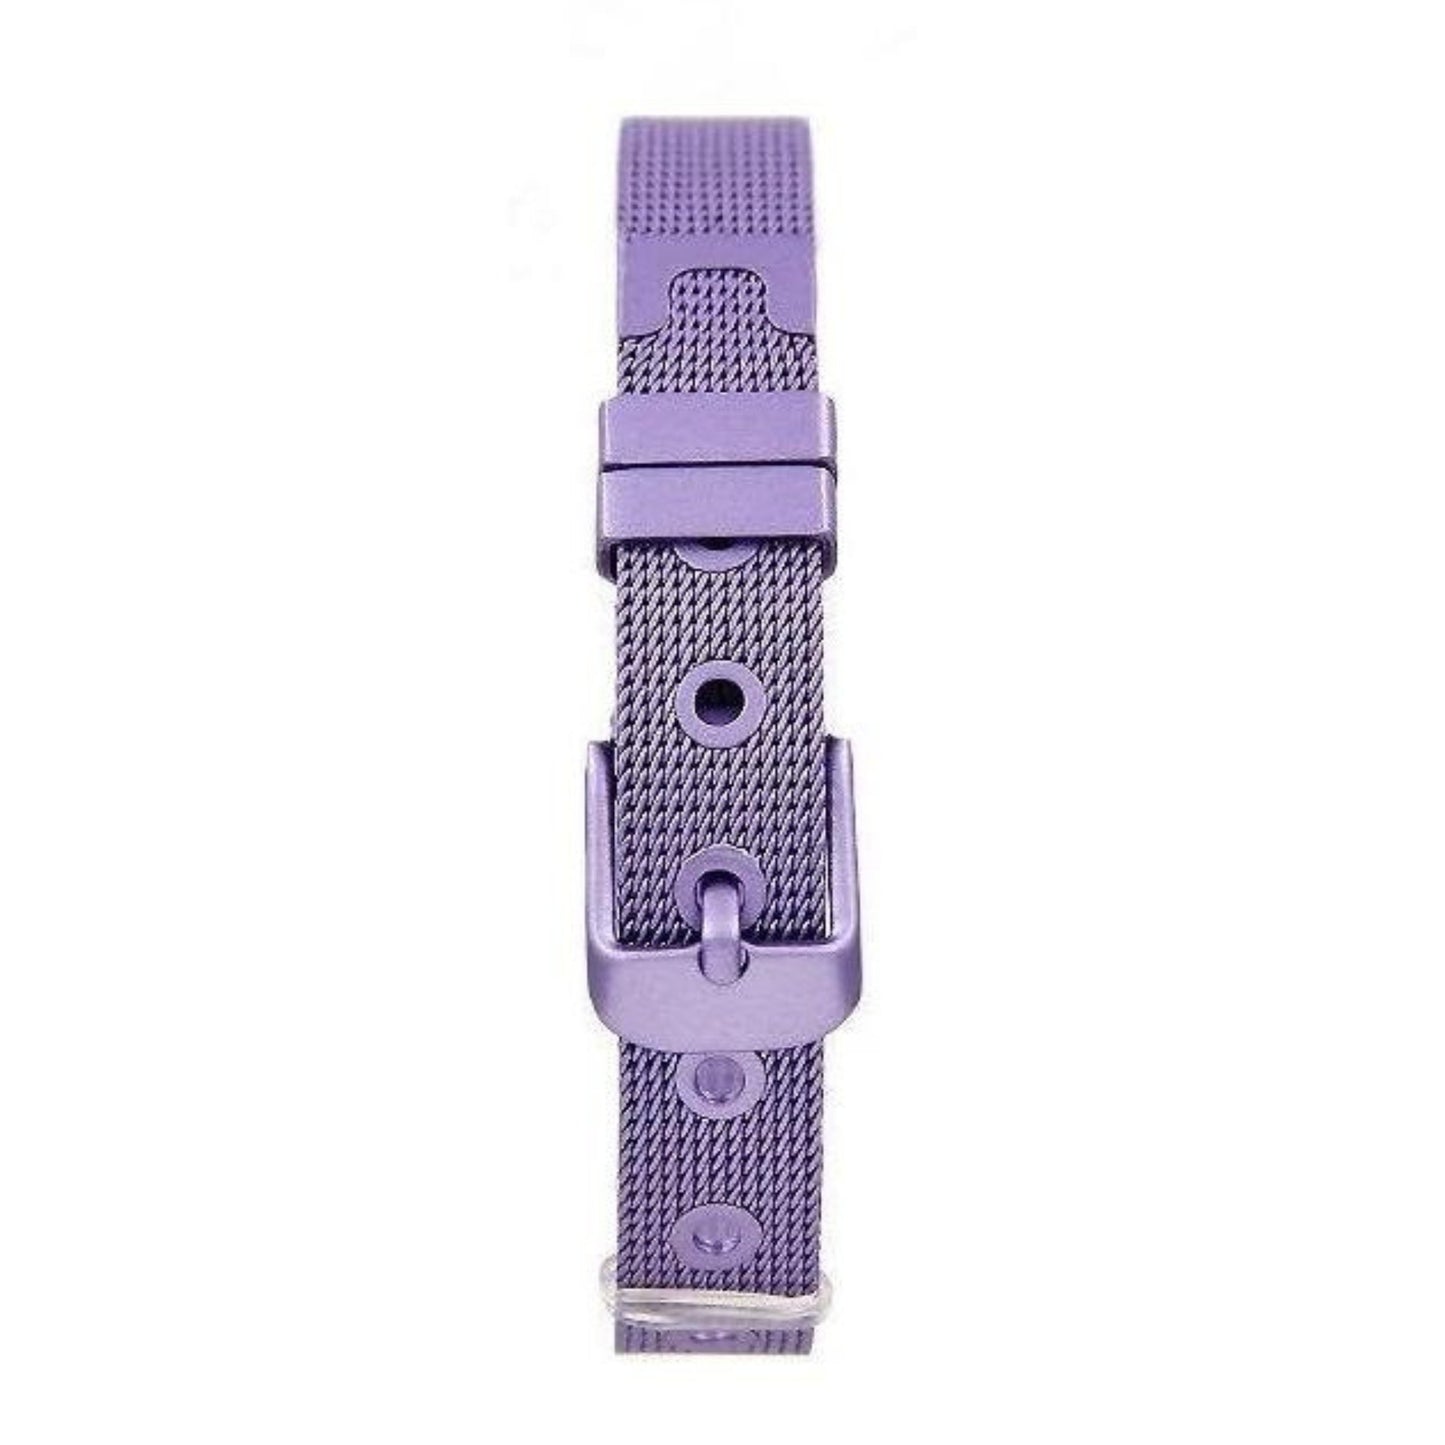 Vita Bracelet Lavender Shine - The Little Jewellery Company